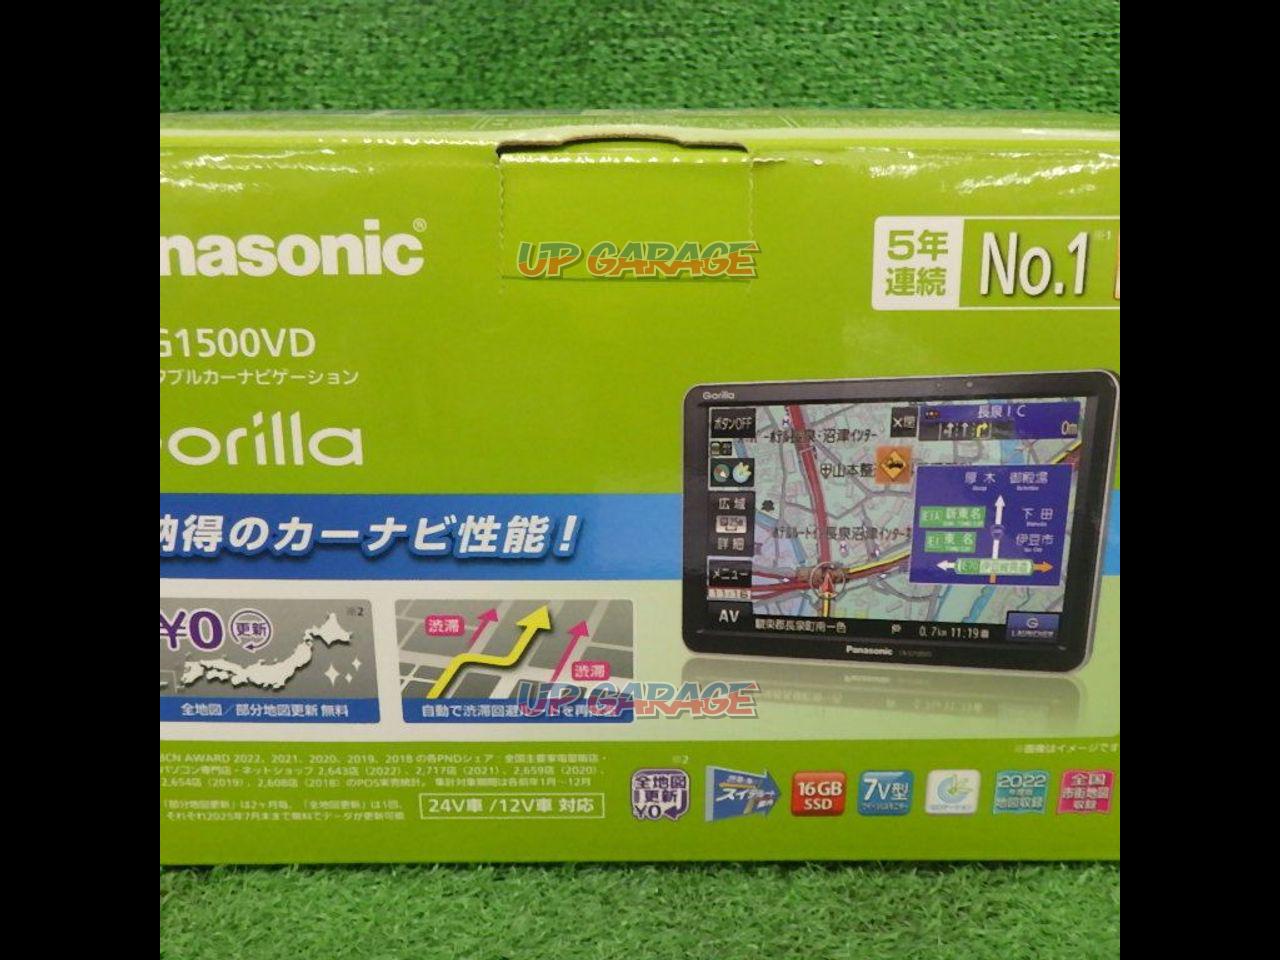 Panasonic Gorilla CN-G1500VD Portable Navigation | Portable Memory